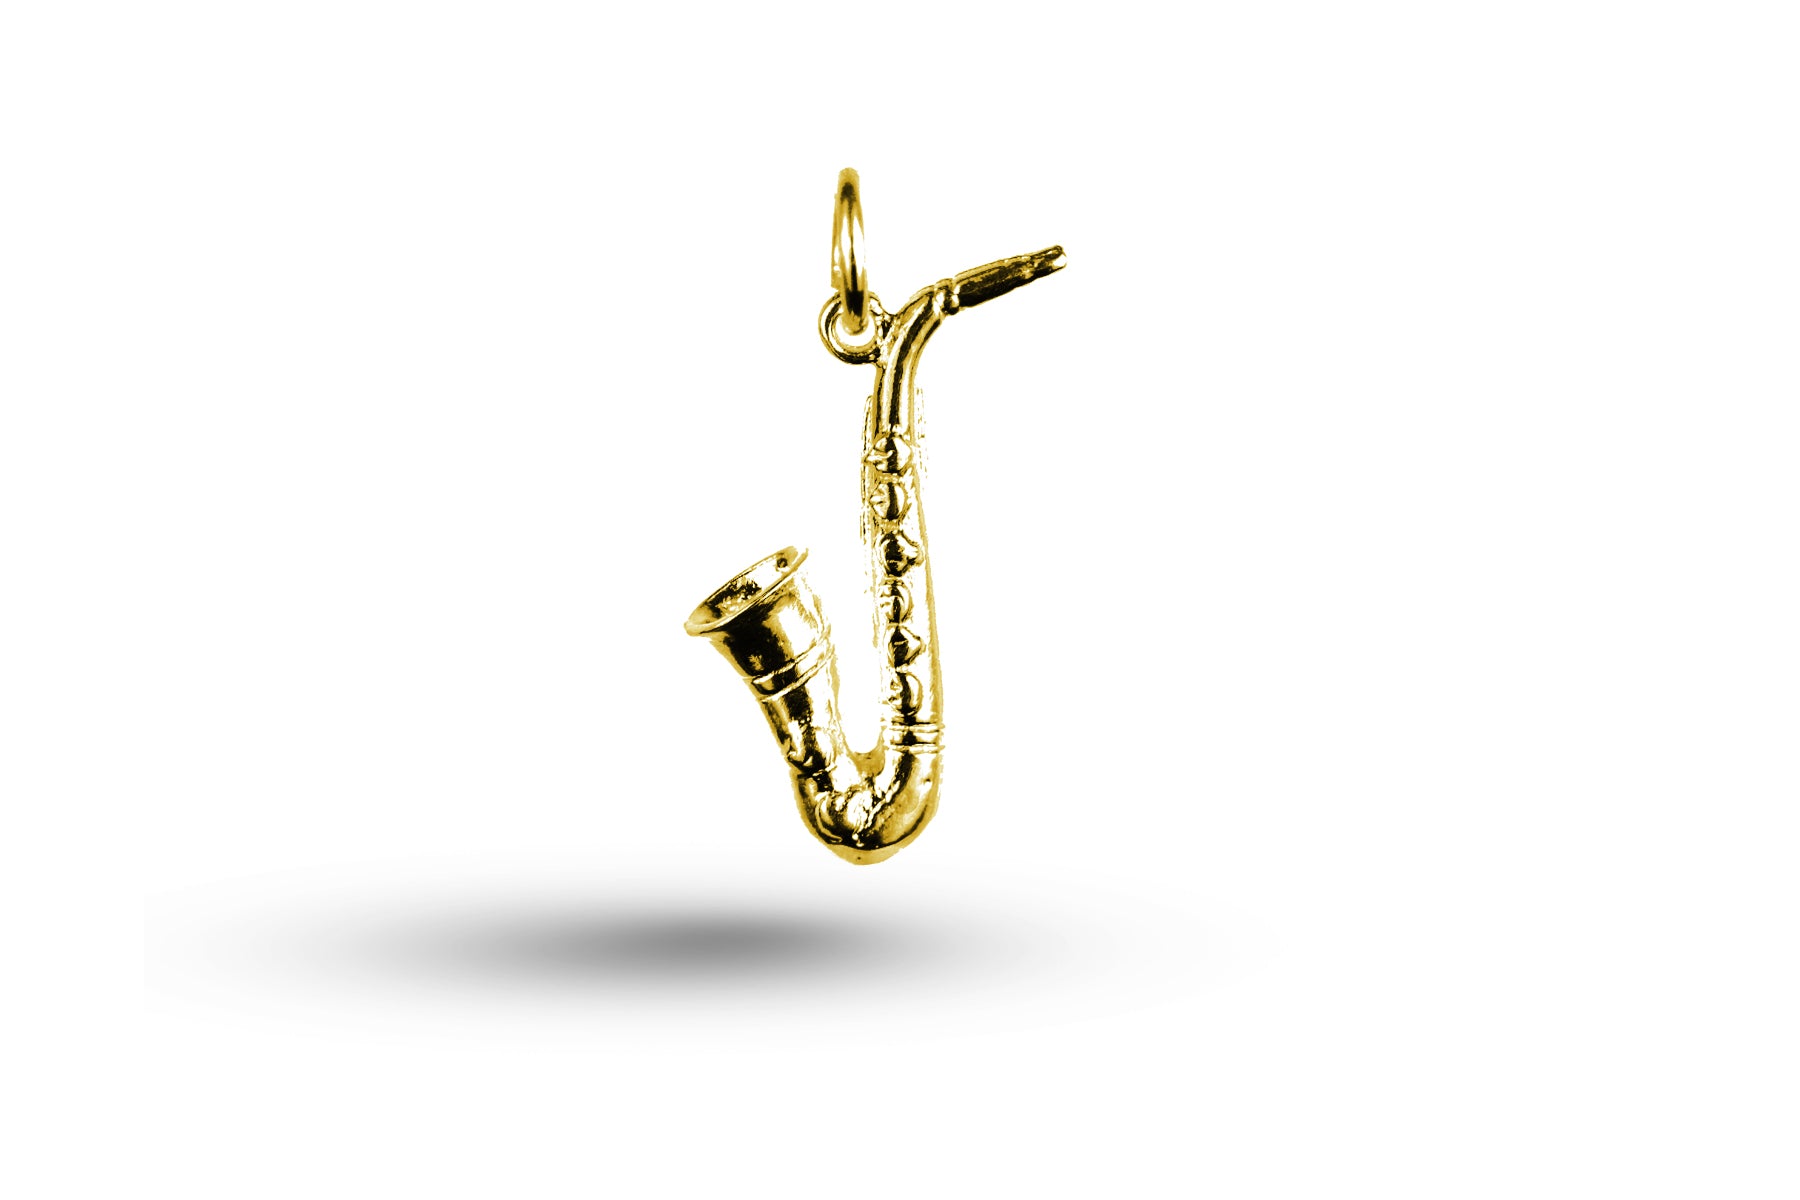 Yellow gold Saxophone charm.